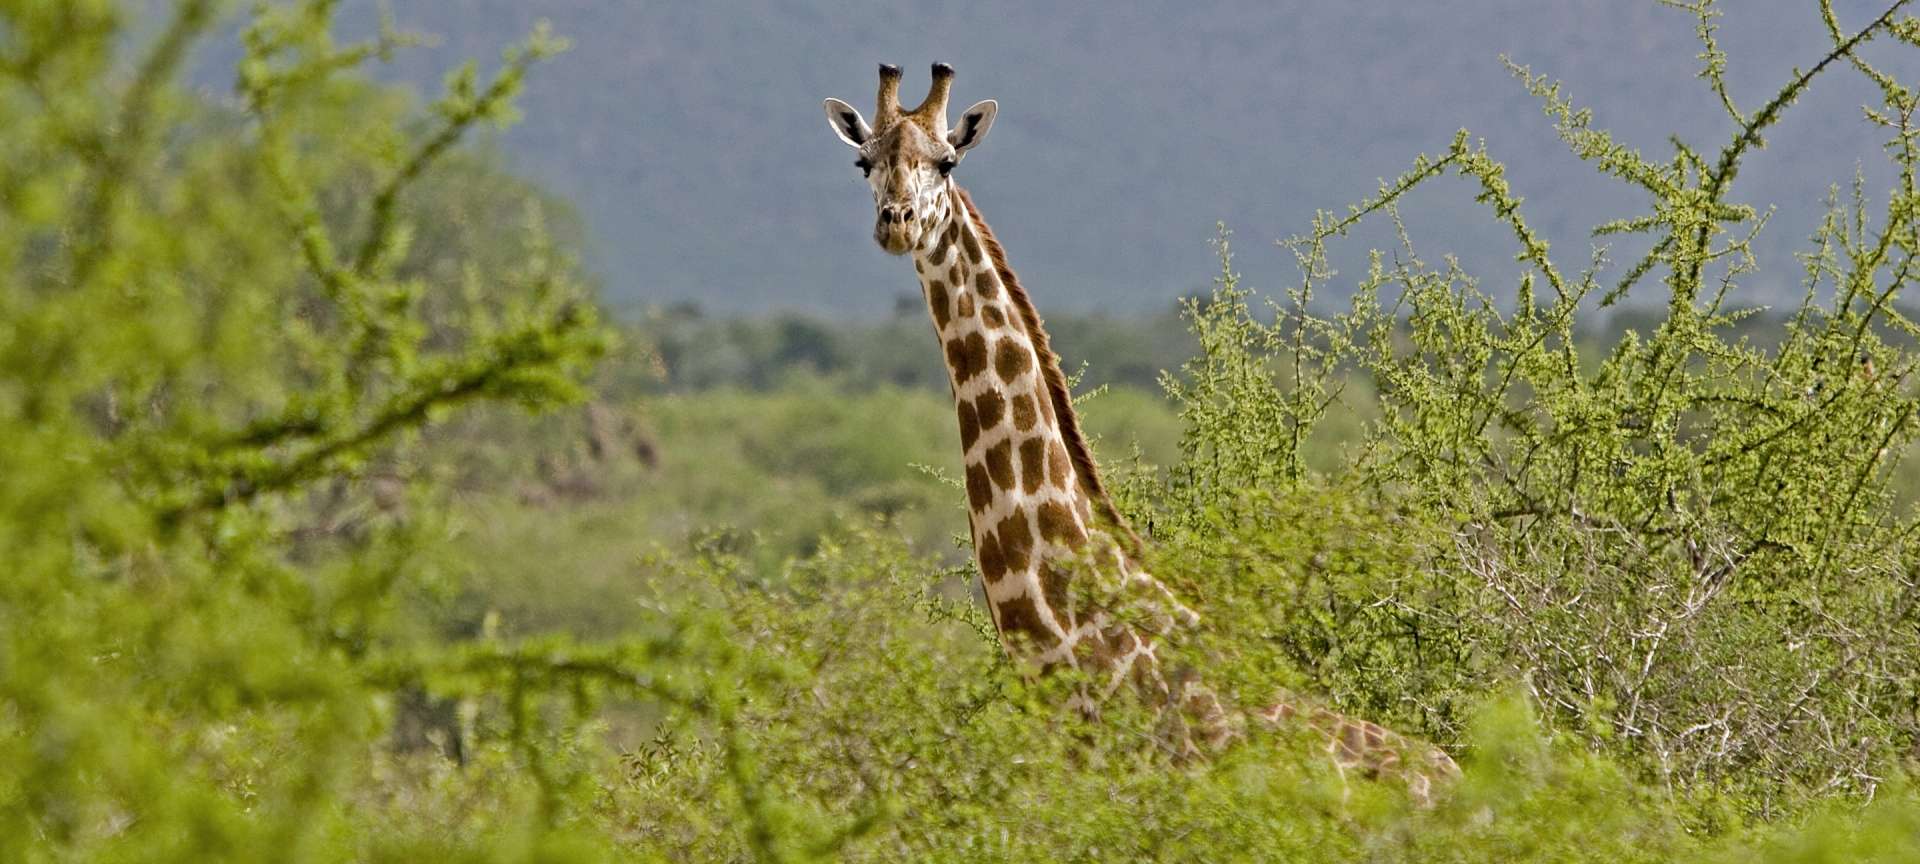 Giraffe_Tsavo East_Kenya